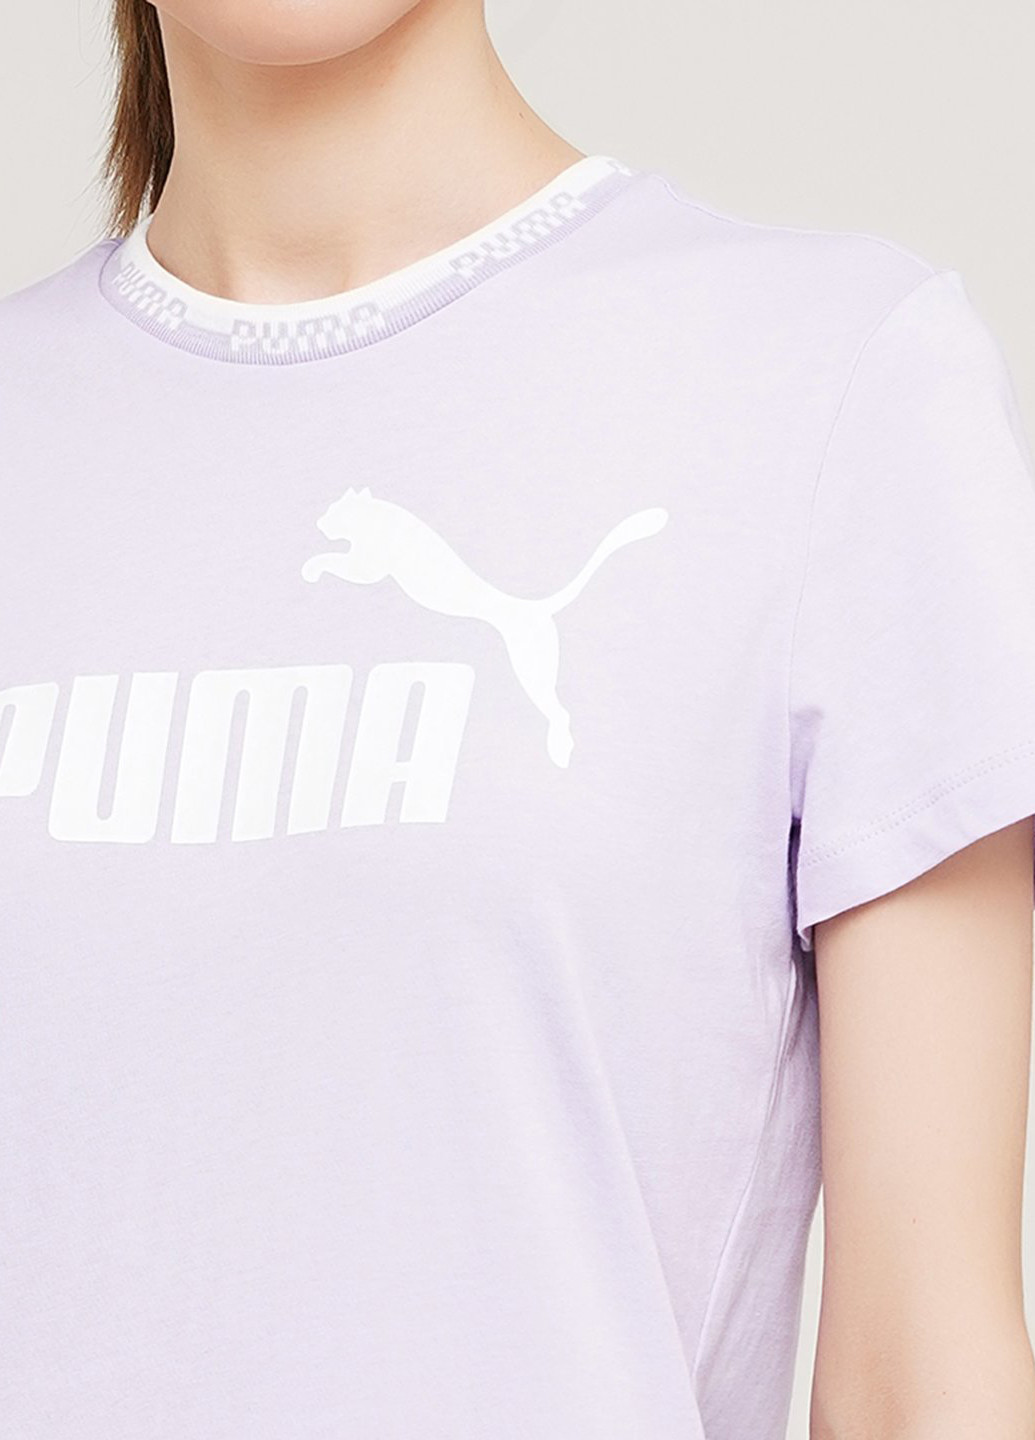 Лиловая всесезон футболка Puma Amplified Graphic Tee